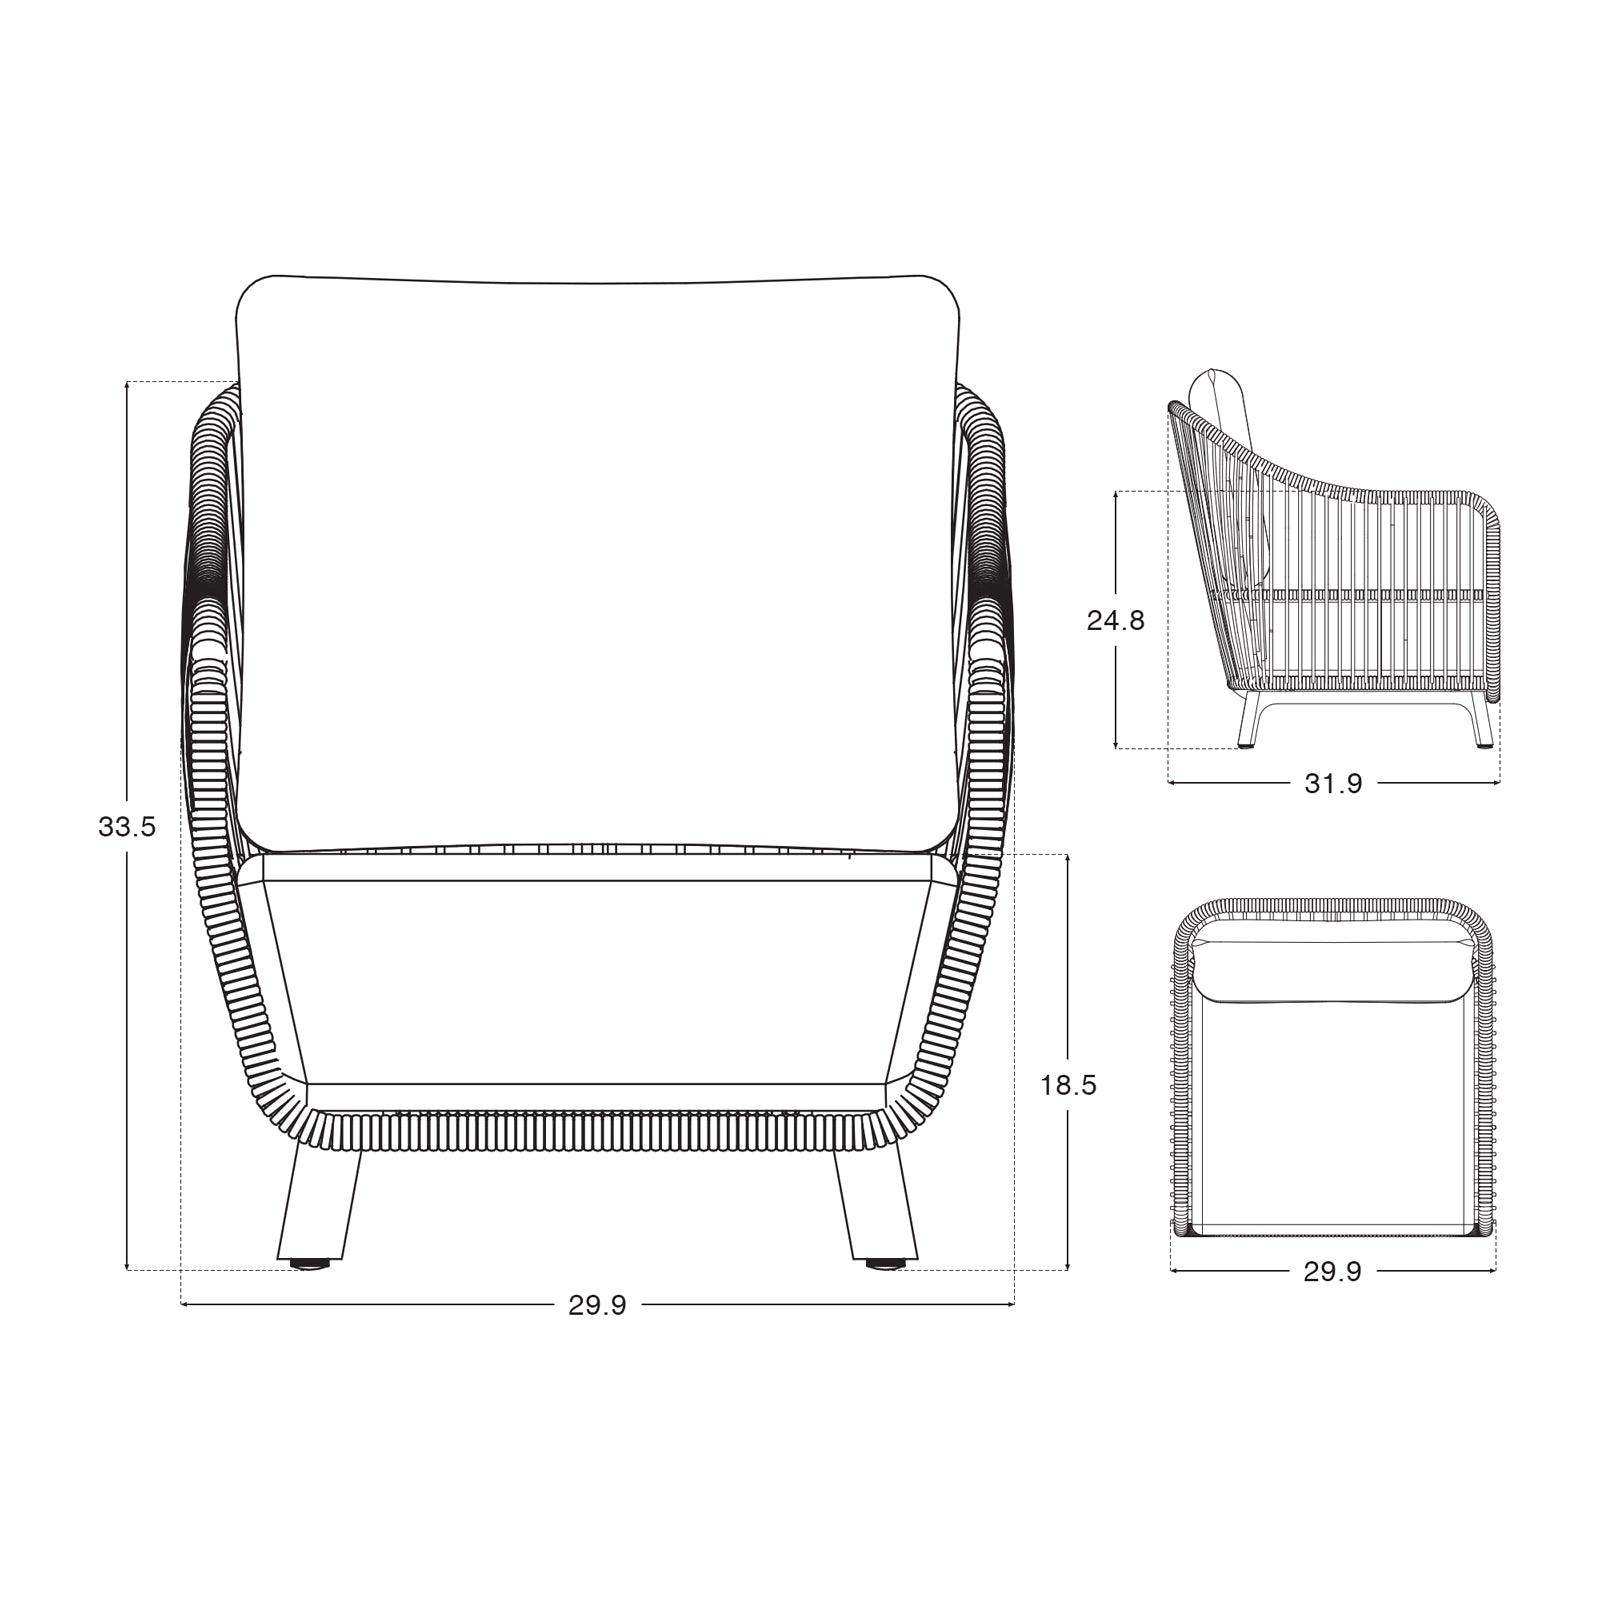 Natural-Firefall Lounge Chair,Dimension information, Length, height, width data information- Sunsitt Signature